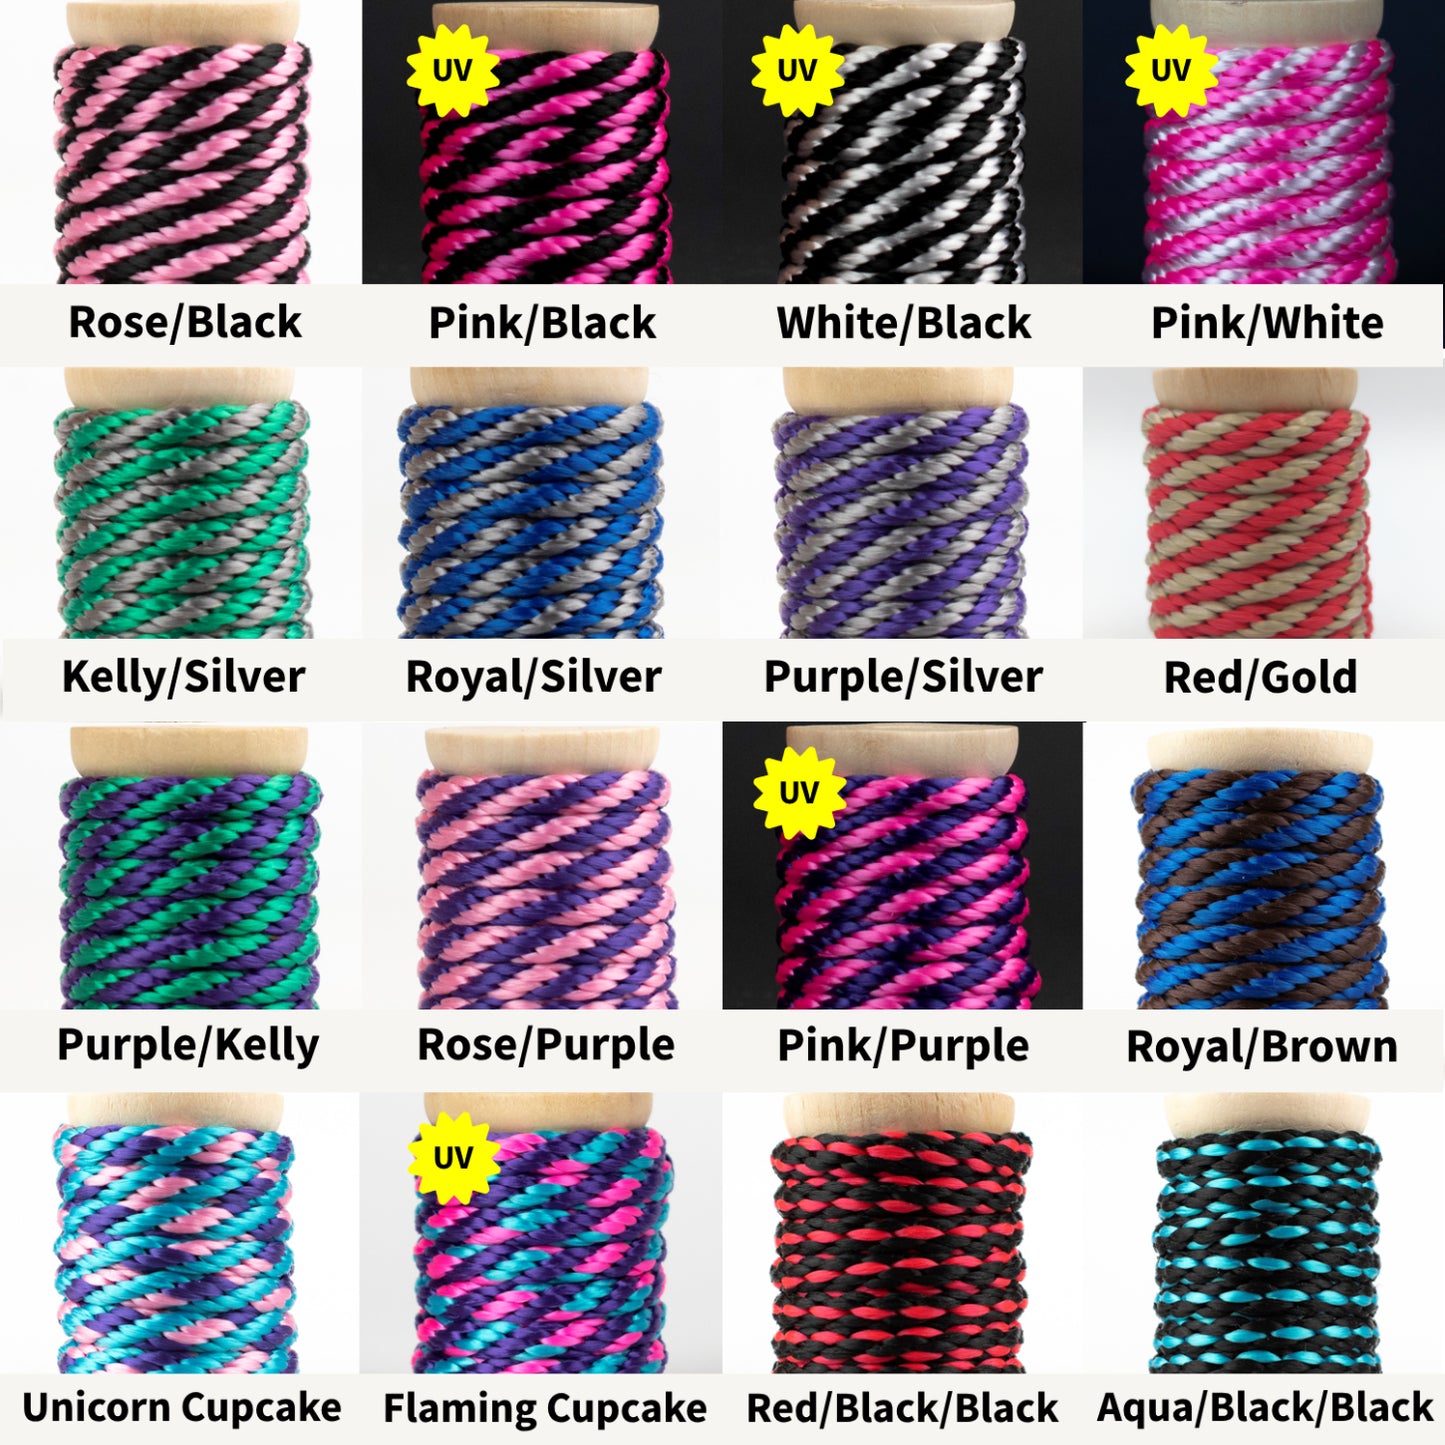 Bondage Rope Color Sample pack - MFP